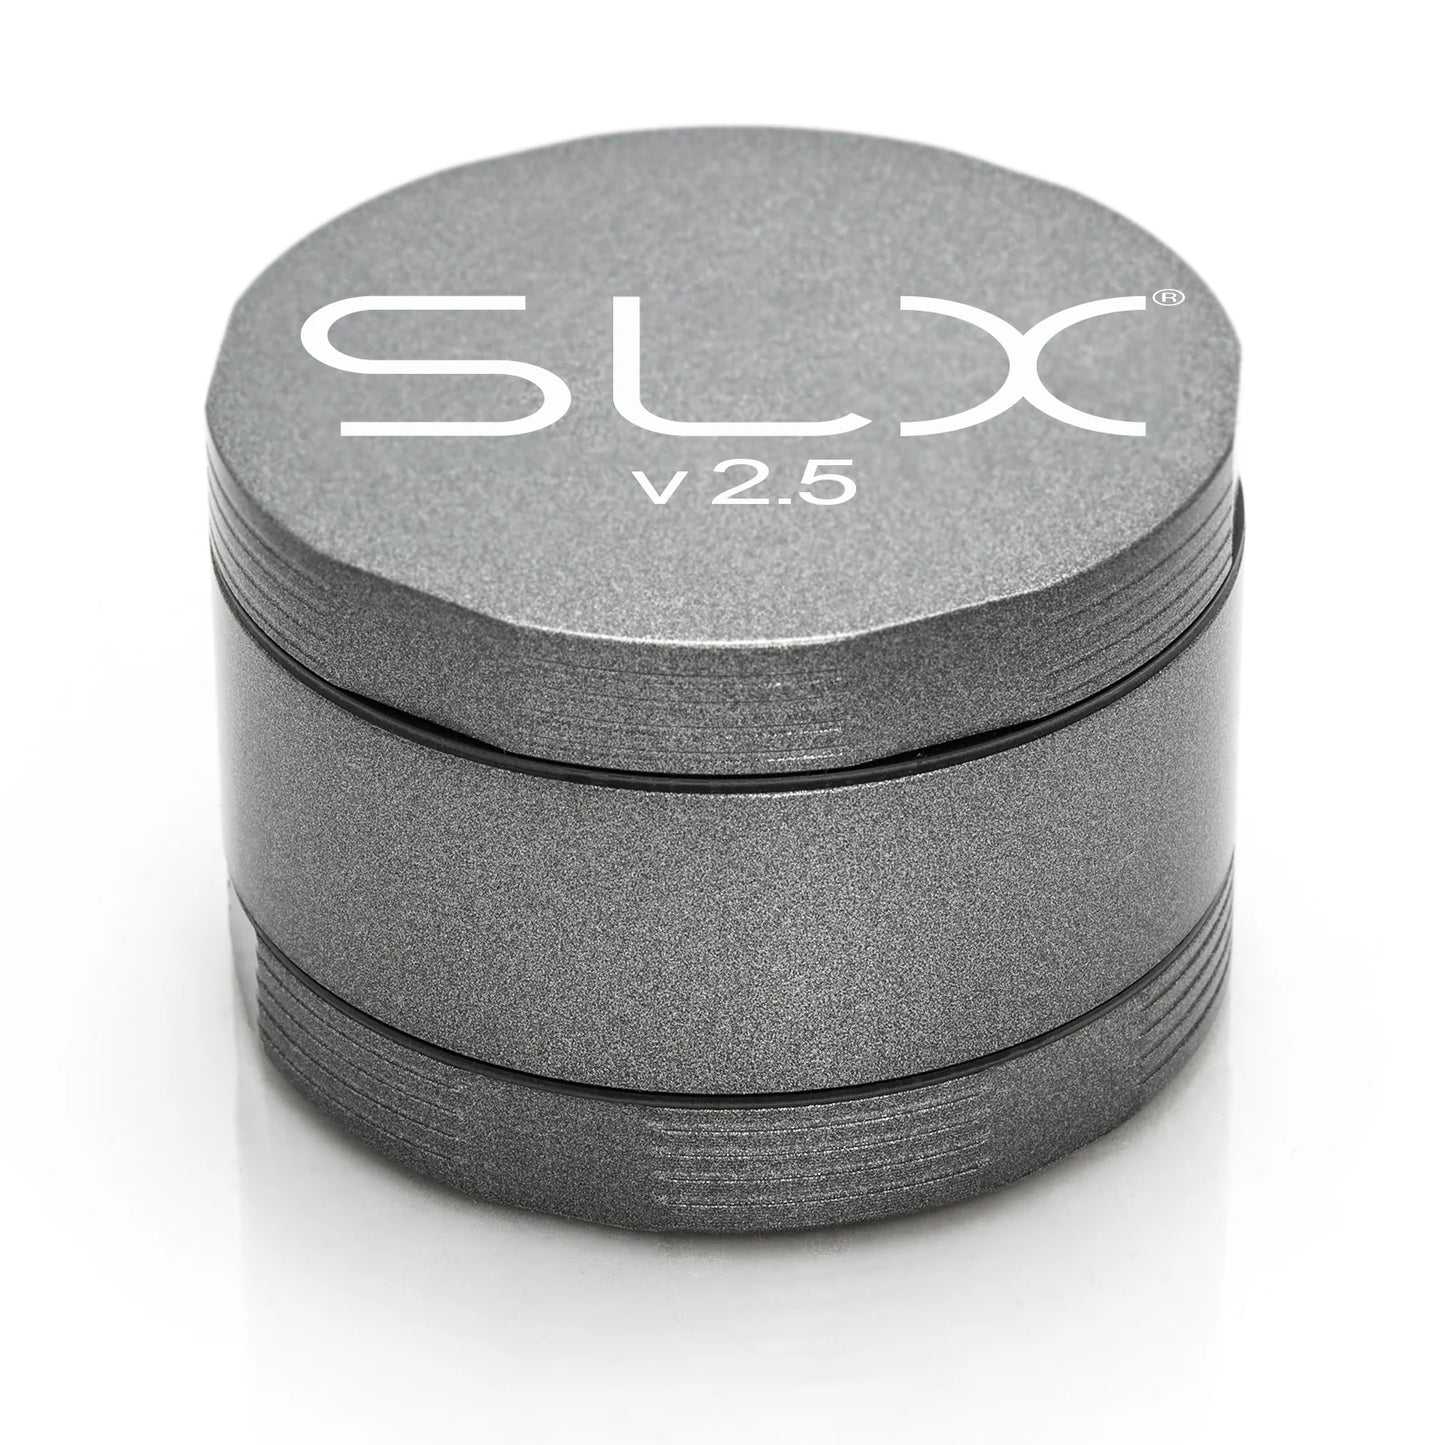 SLX v2.5 2.0" Ceramic Coat Grinder - Silver